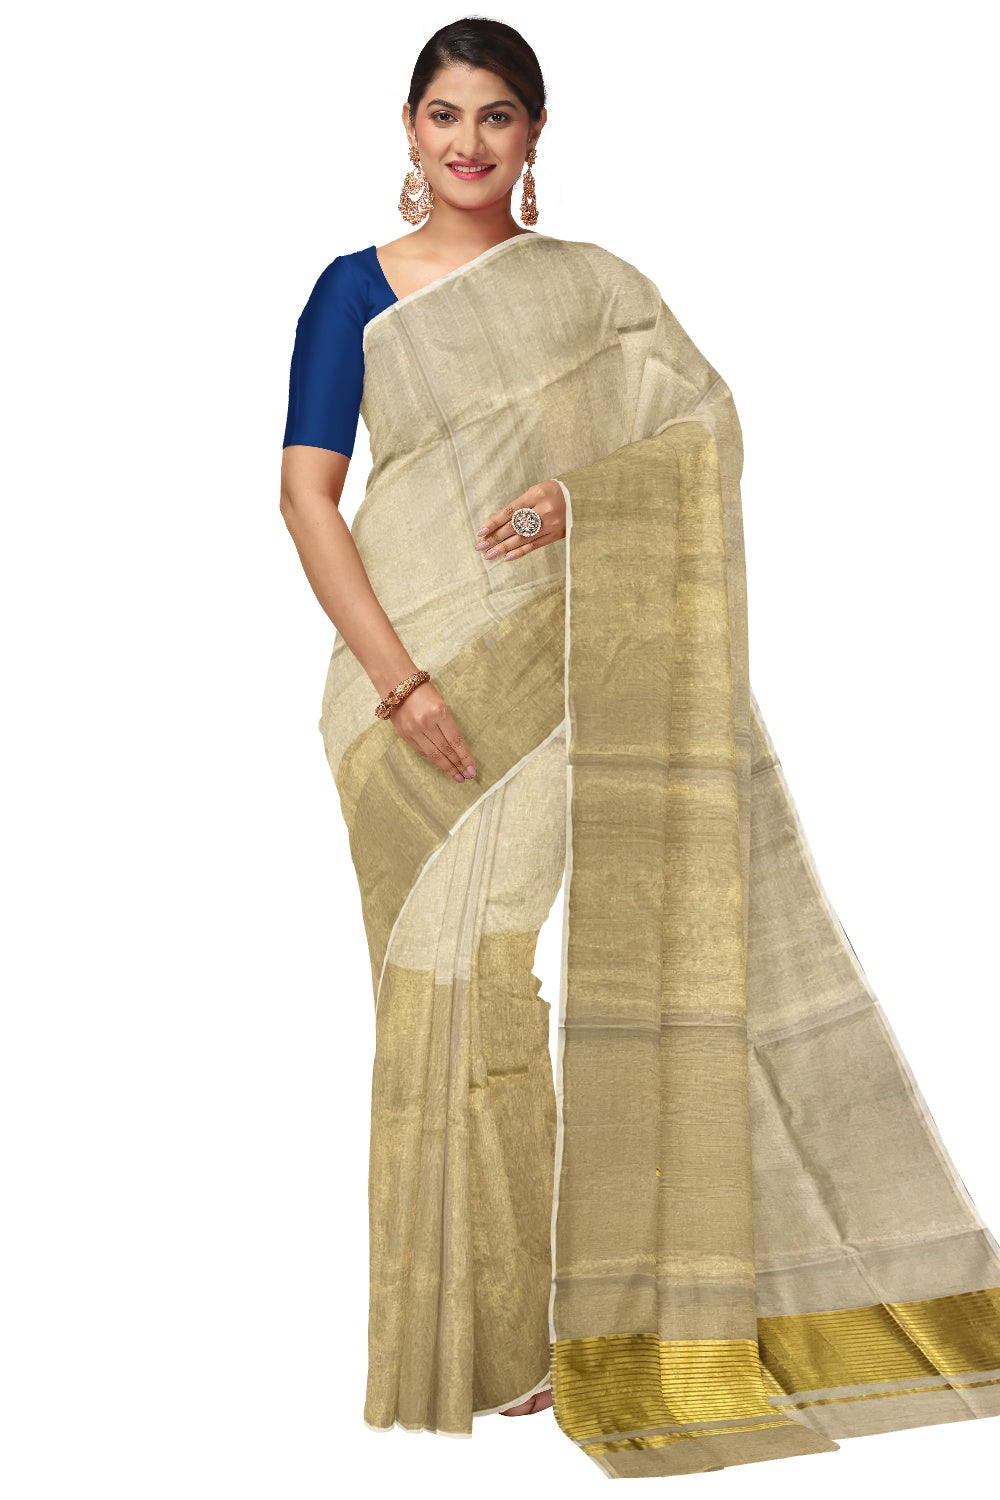 Southloom™ Premium Handloom Tissue Half & Half Kerala Saree (Clearance Sale)